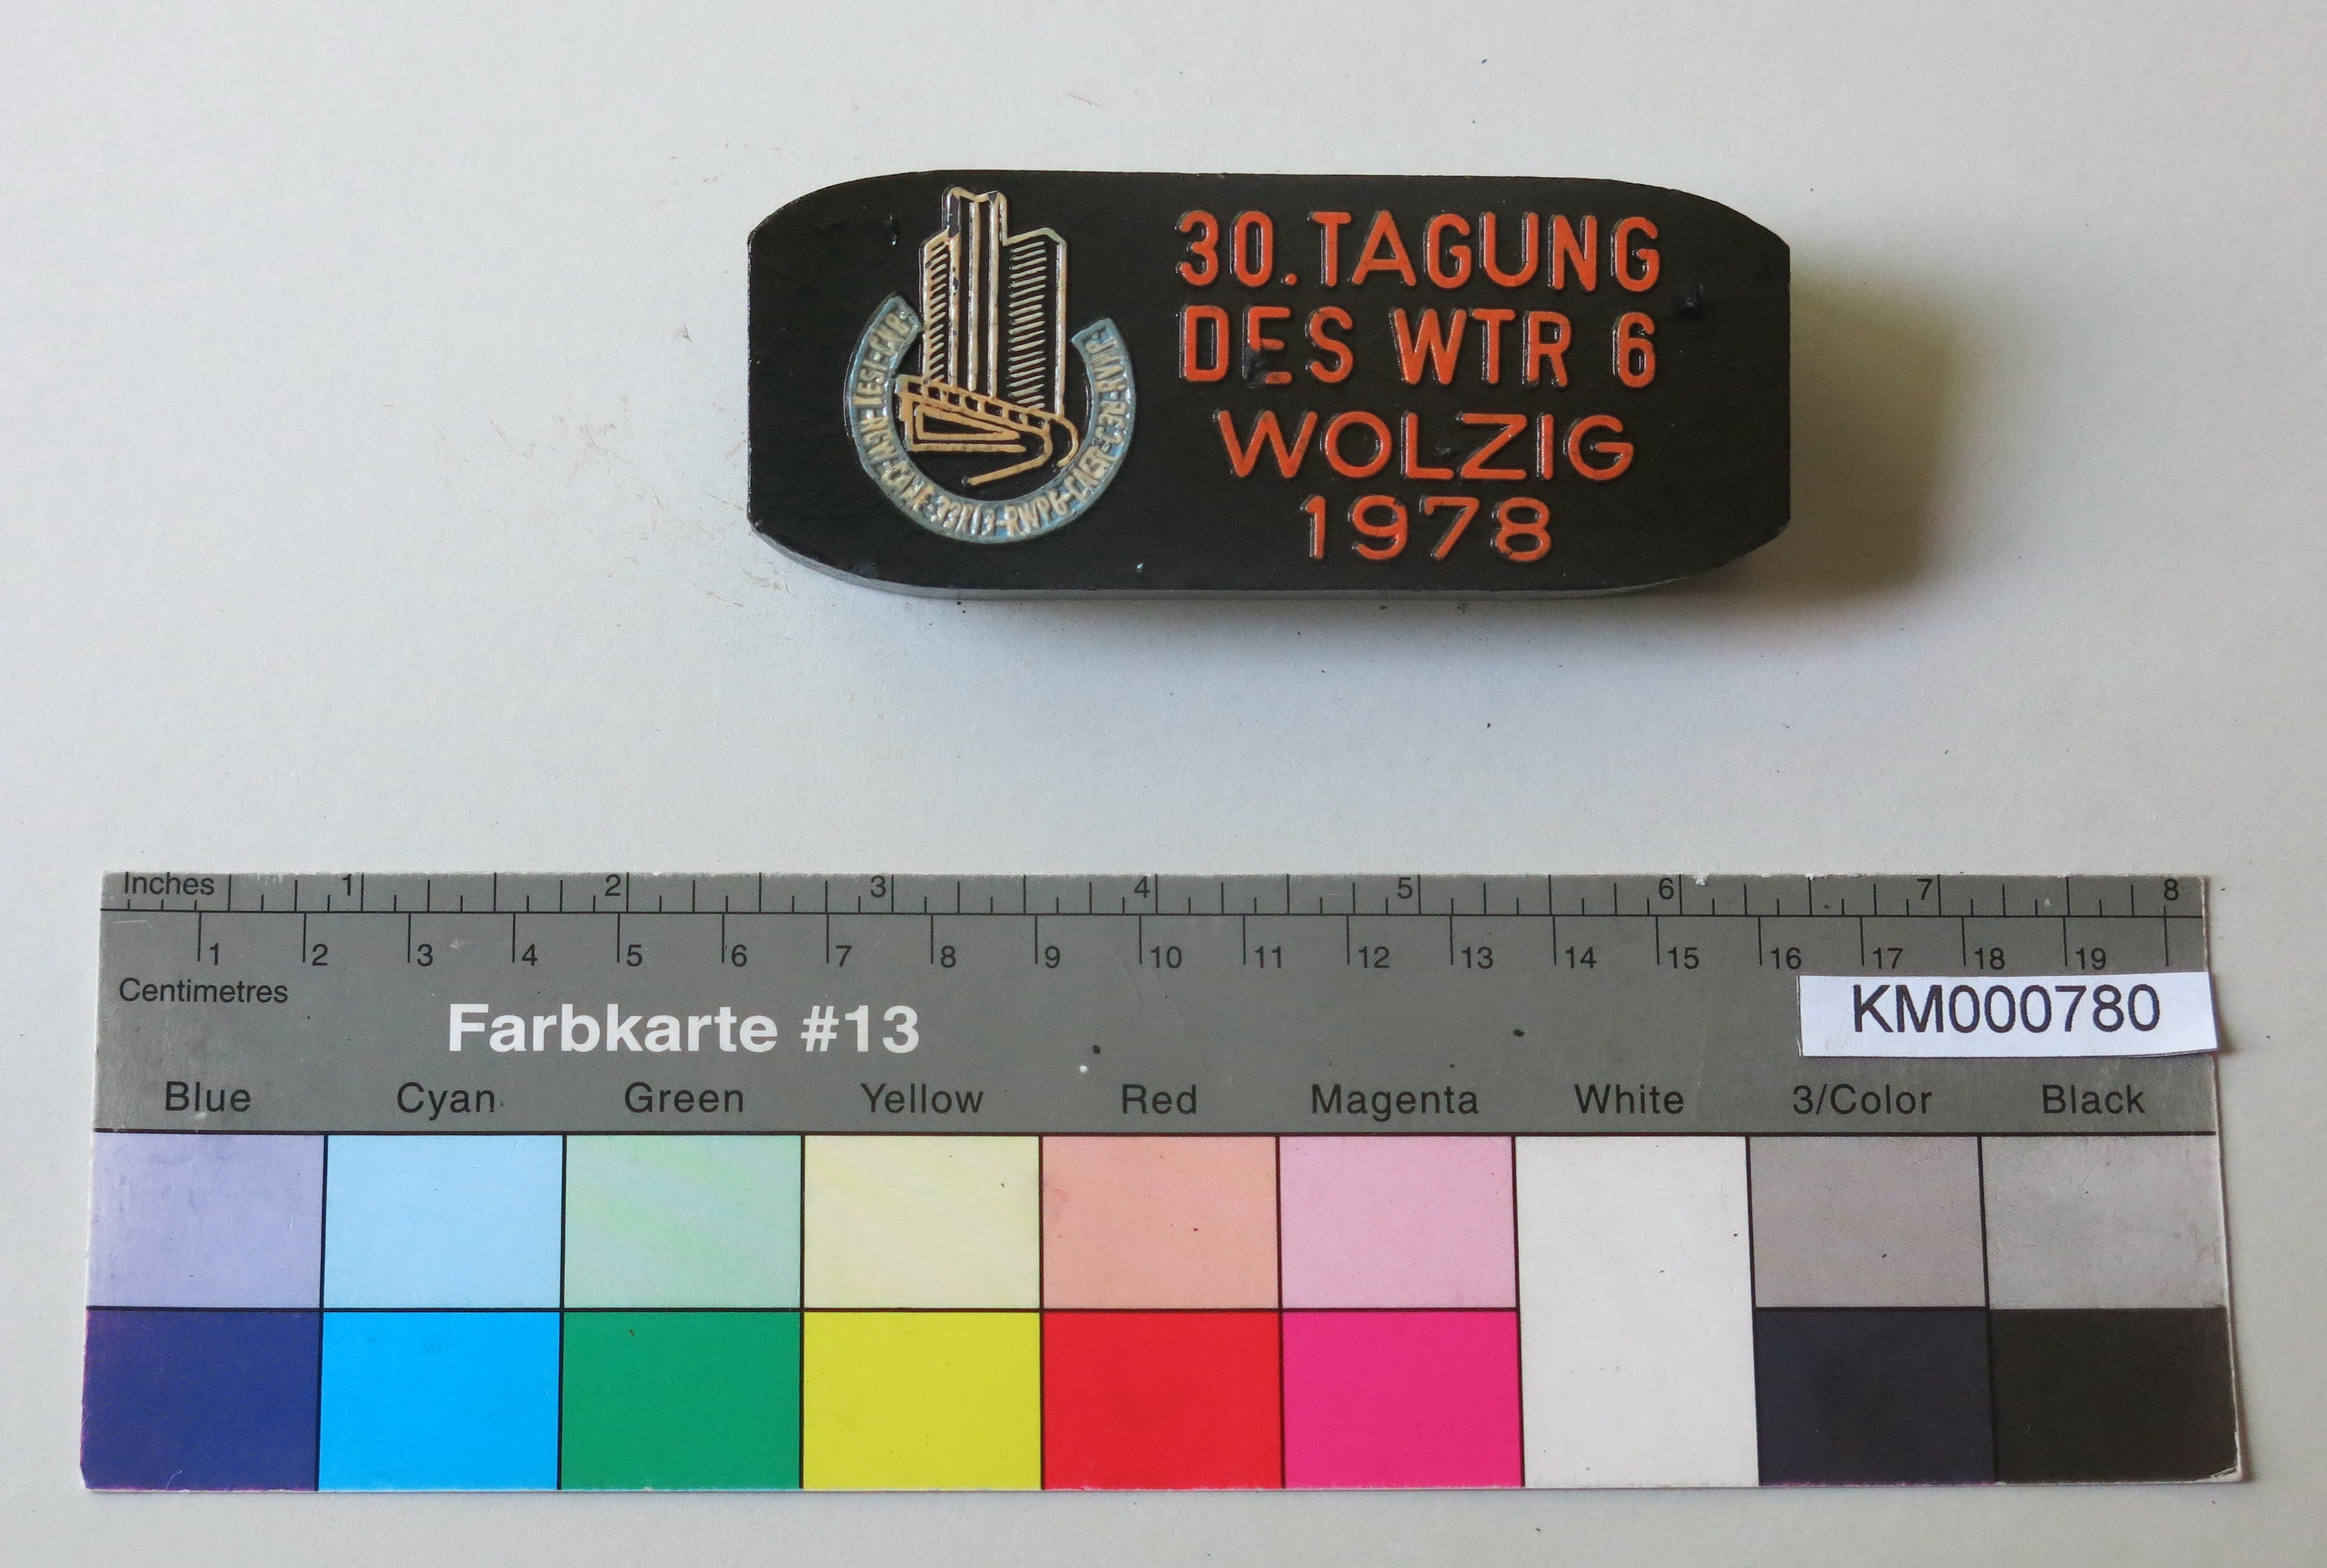 Zierbrikett "30. TAGUNG DES WTR 6 WOLZIG 1978" (Energiefabrik Knappenrode CC BY-SA)